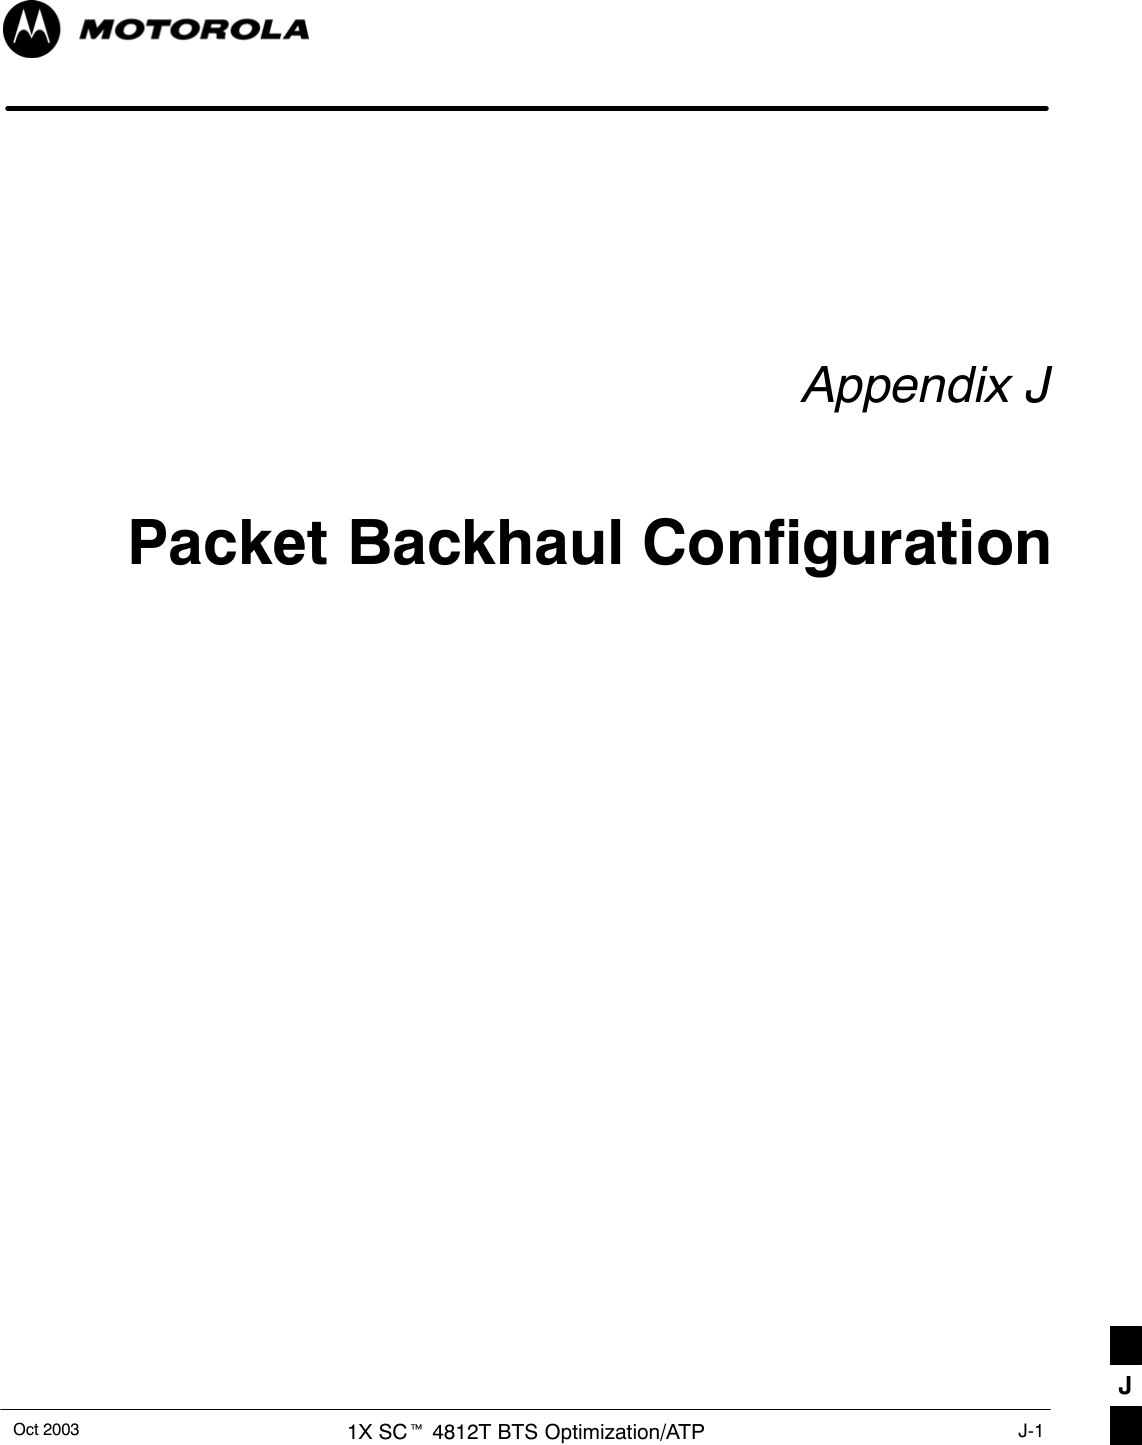 Oct 2003 1X SCt 4812T BTS Optimization/ATP J-1Appendix JPacket Backhaul ConfigurationJ